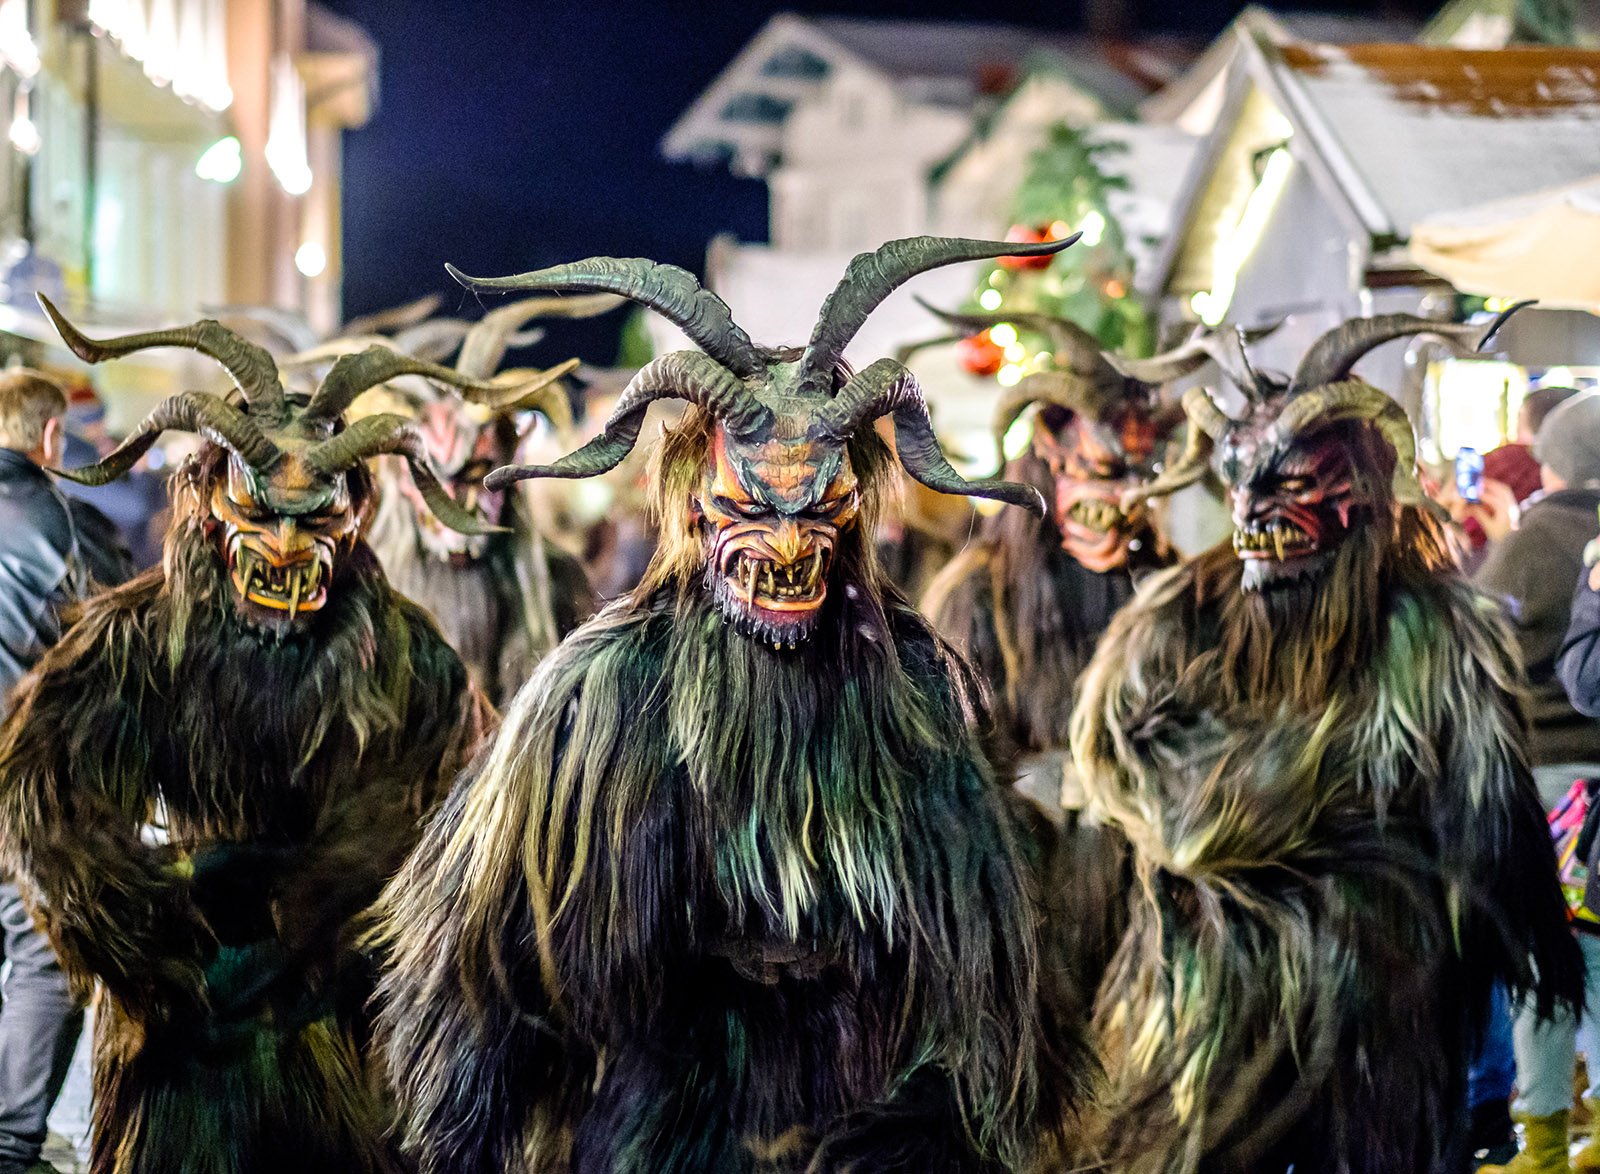 krampus parade at night in Germany